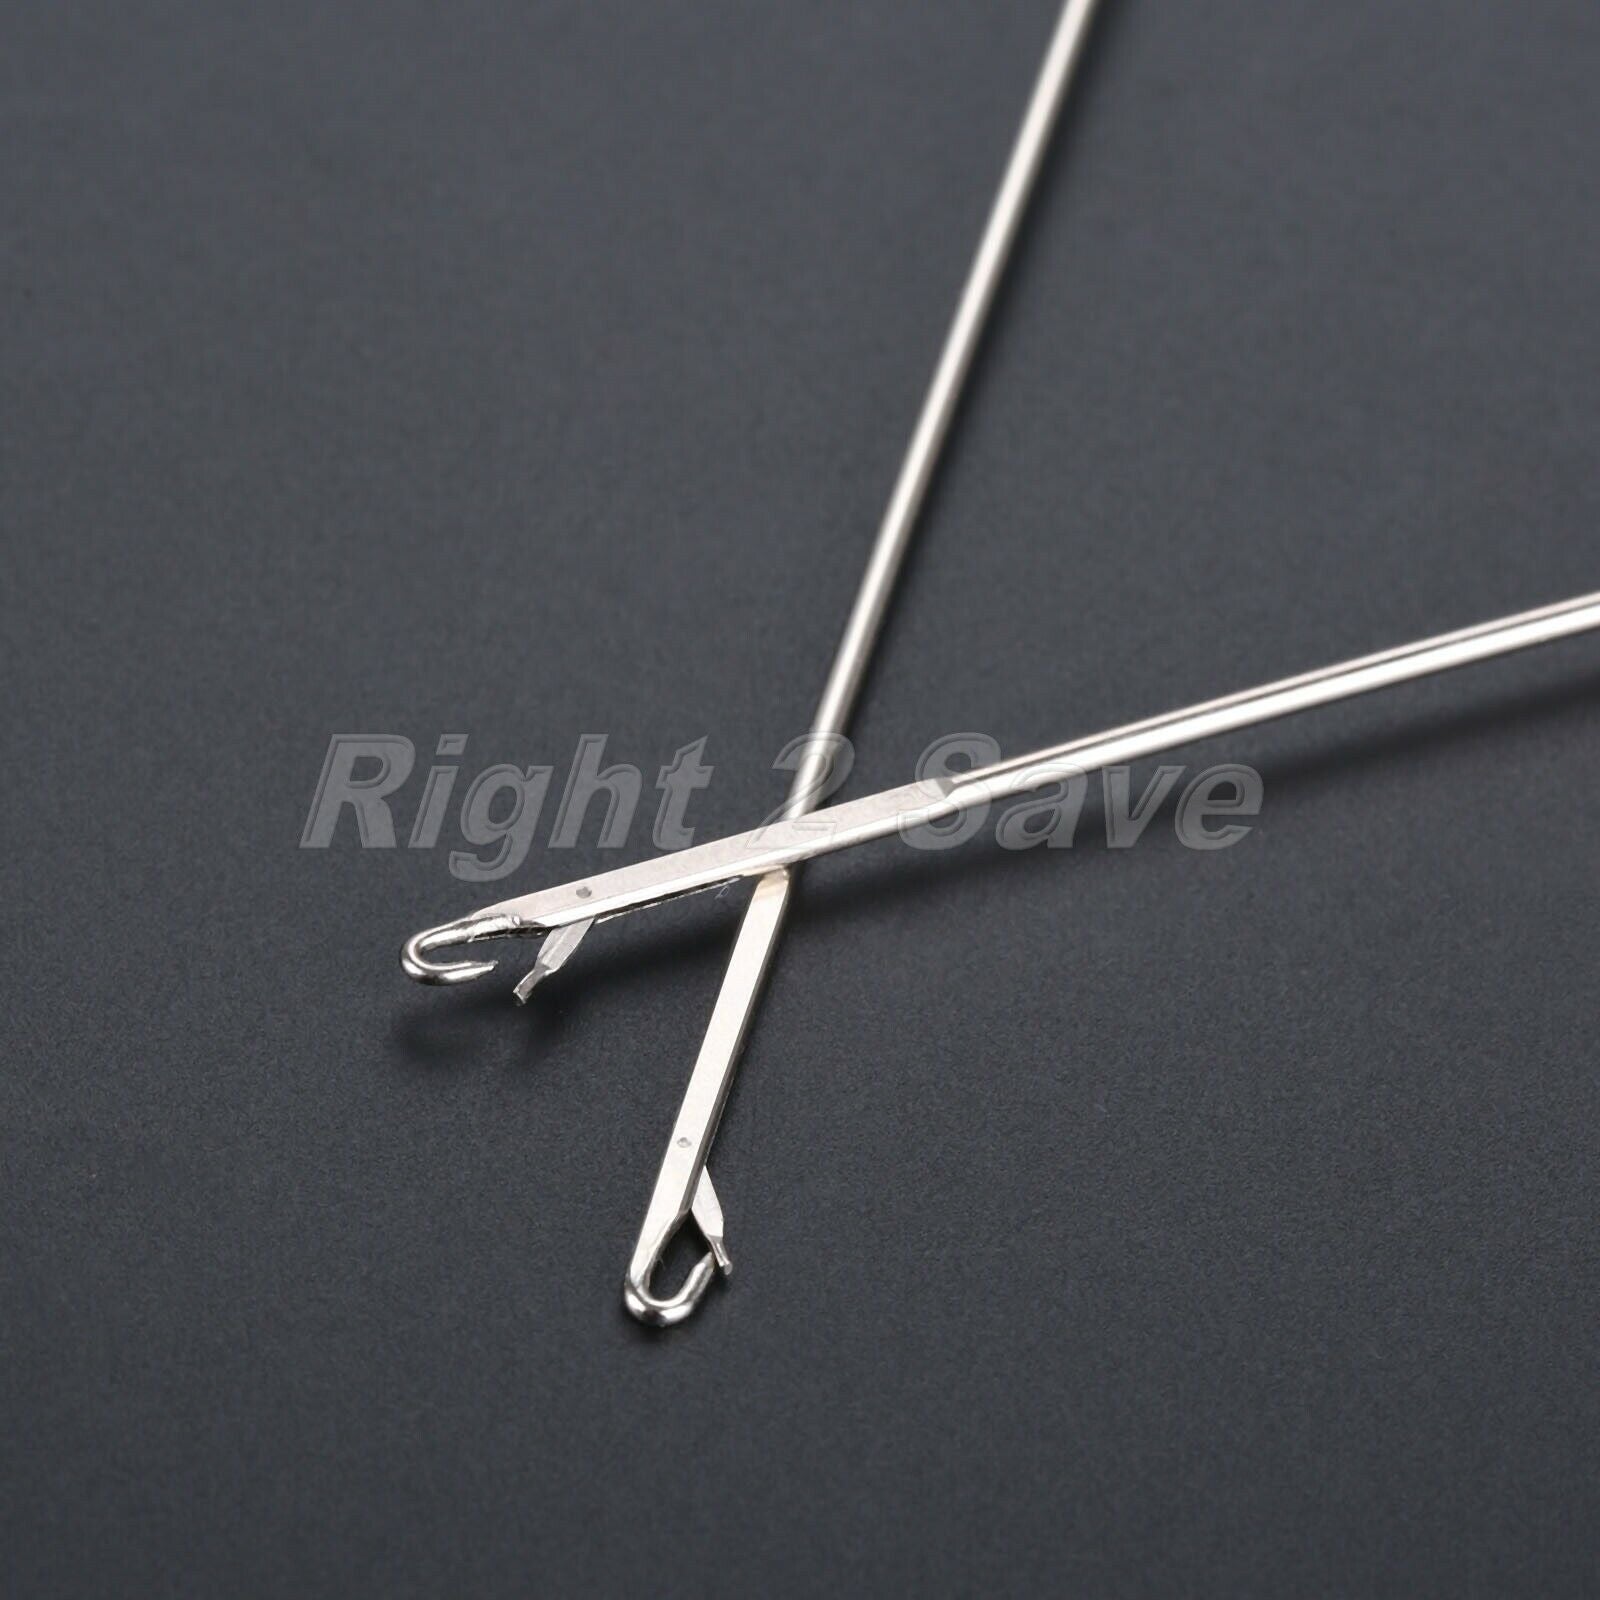 2Pcs/set Sewing Loop Turner Hoop for Fabric String Belts Practical Tool 2 Size